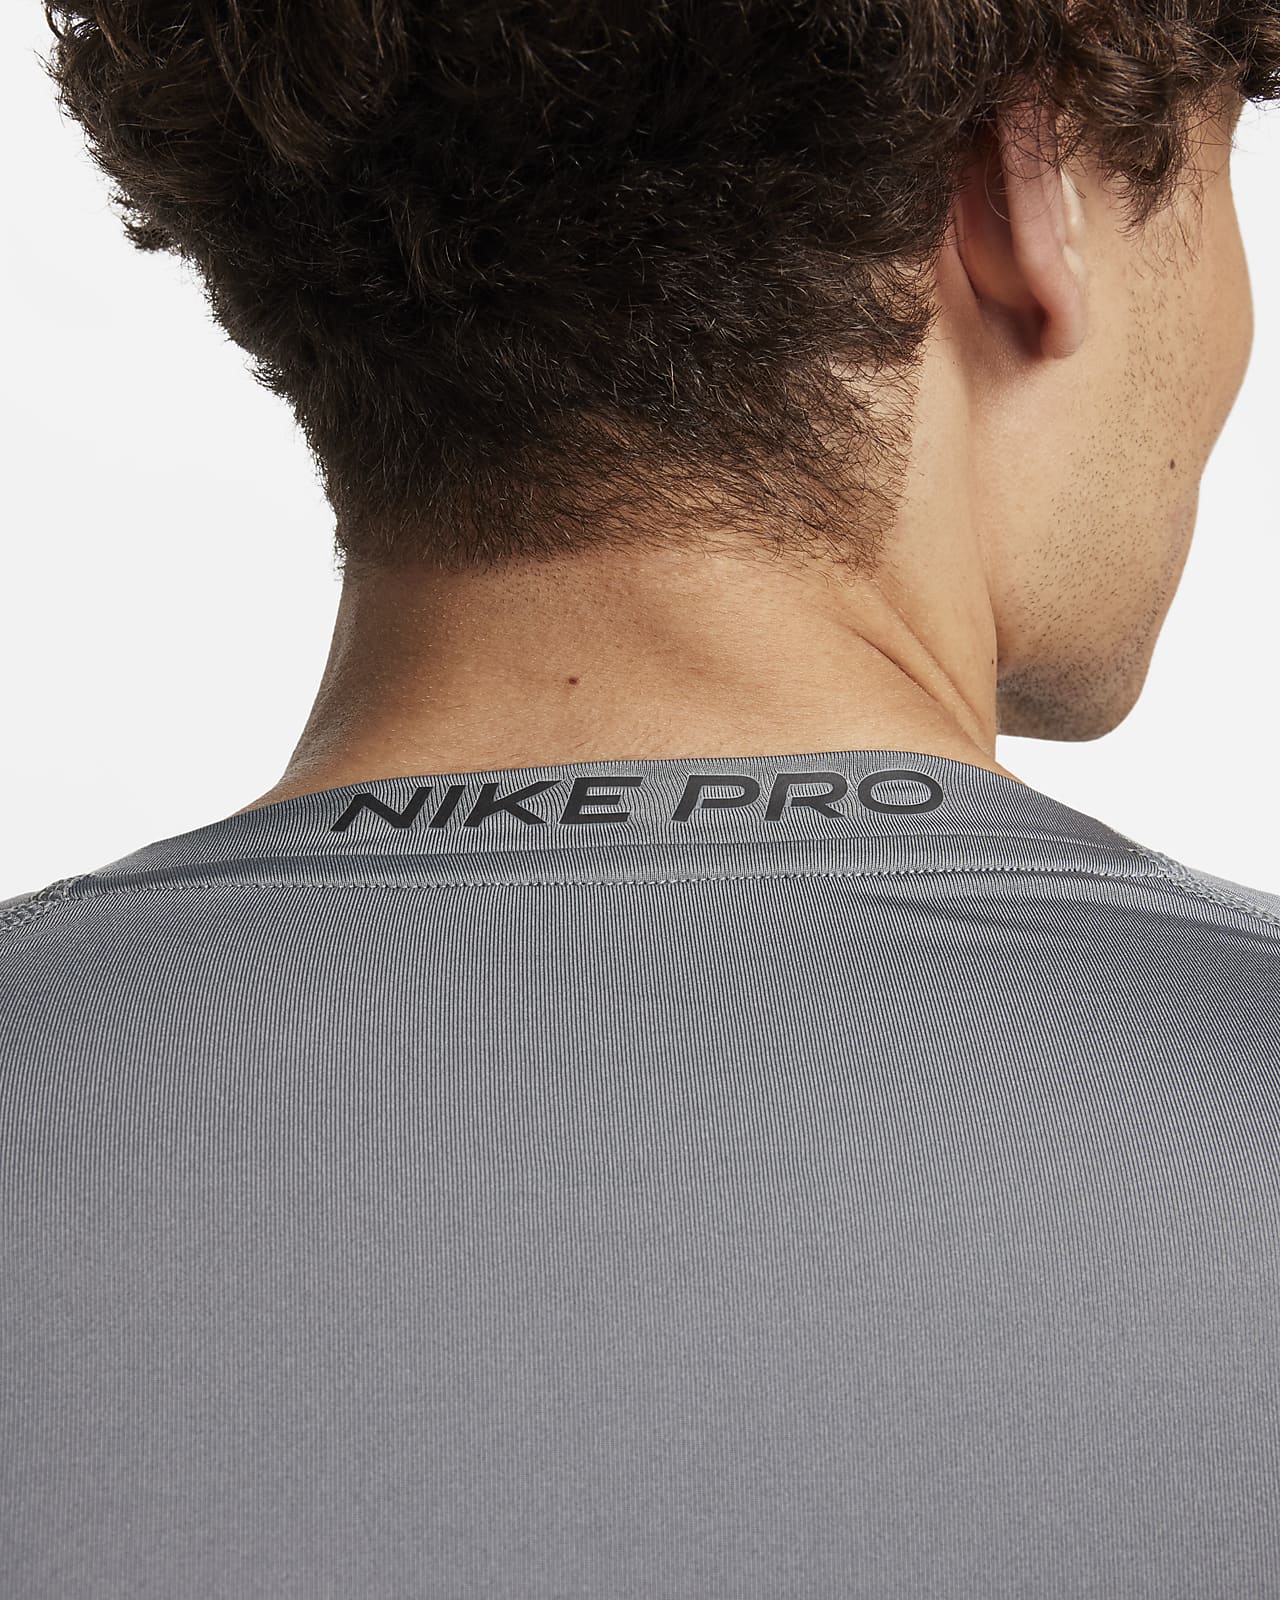 Nike Pro Men's Dri-FIT Slim Fit Long-Sleeve Top